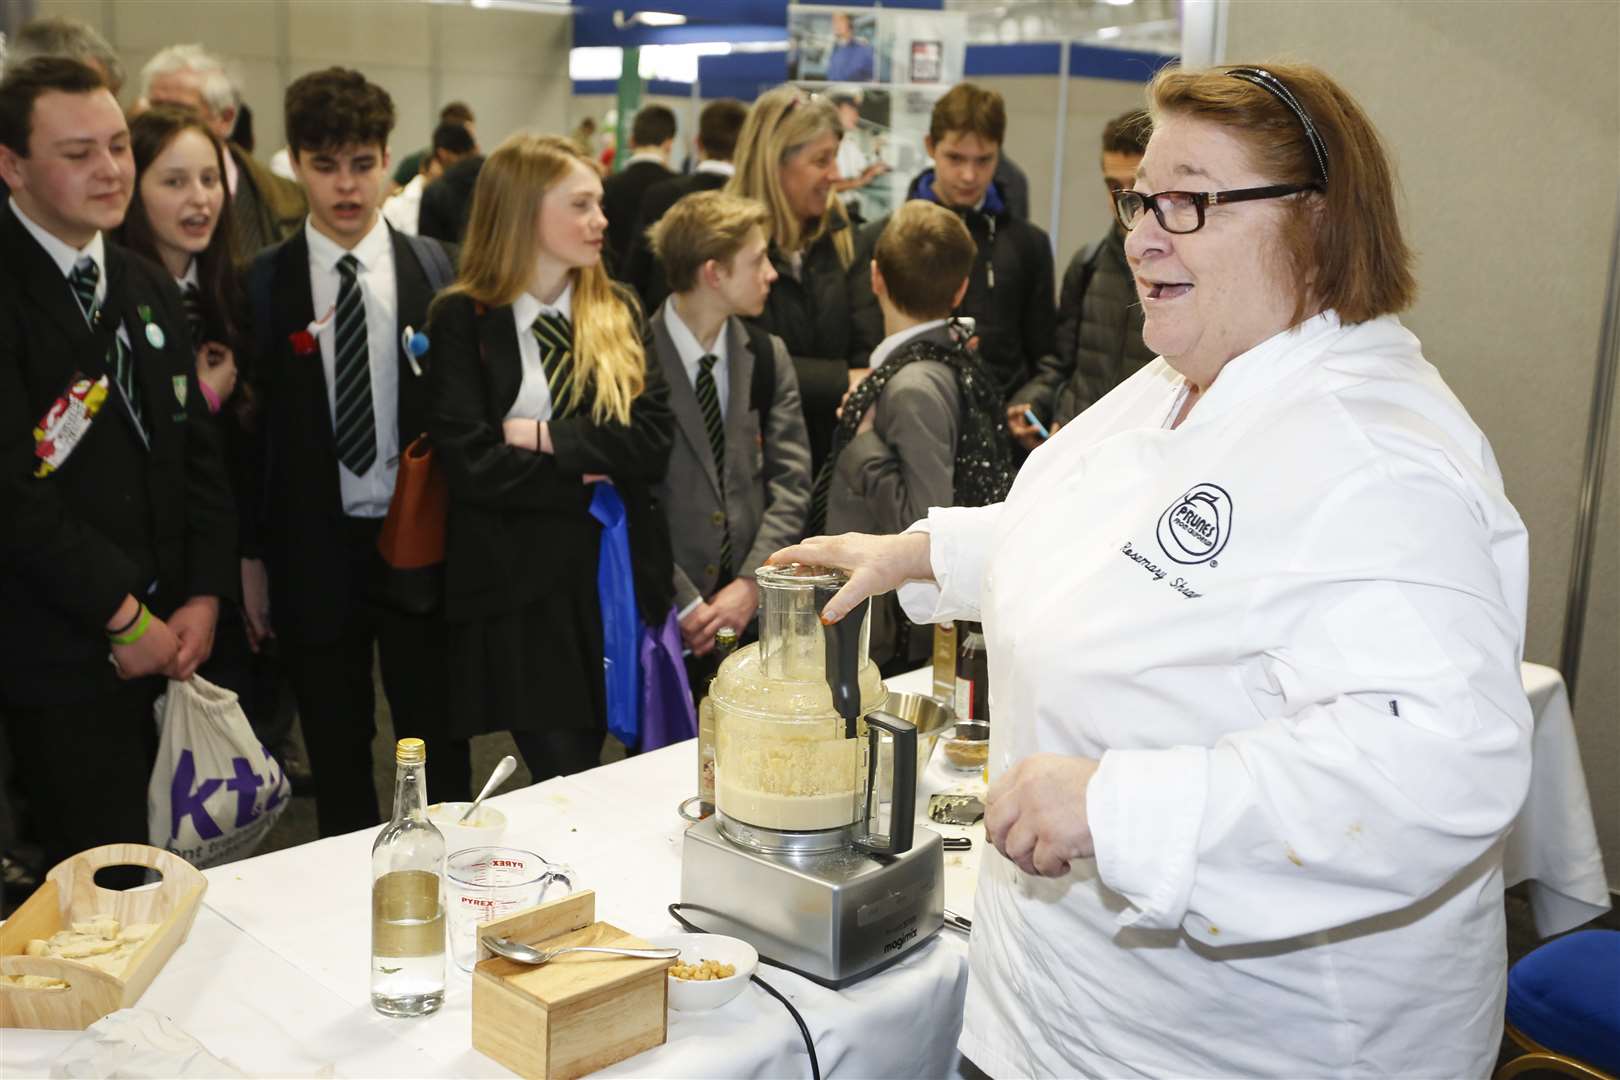 Celebrity chef Rosemary Shrager spoke to pupils